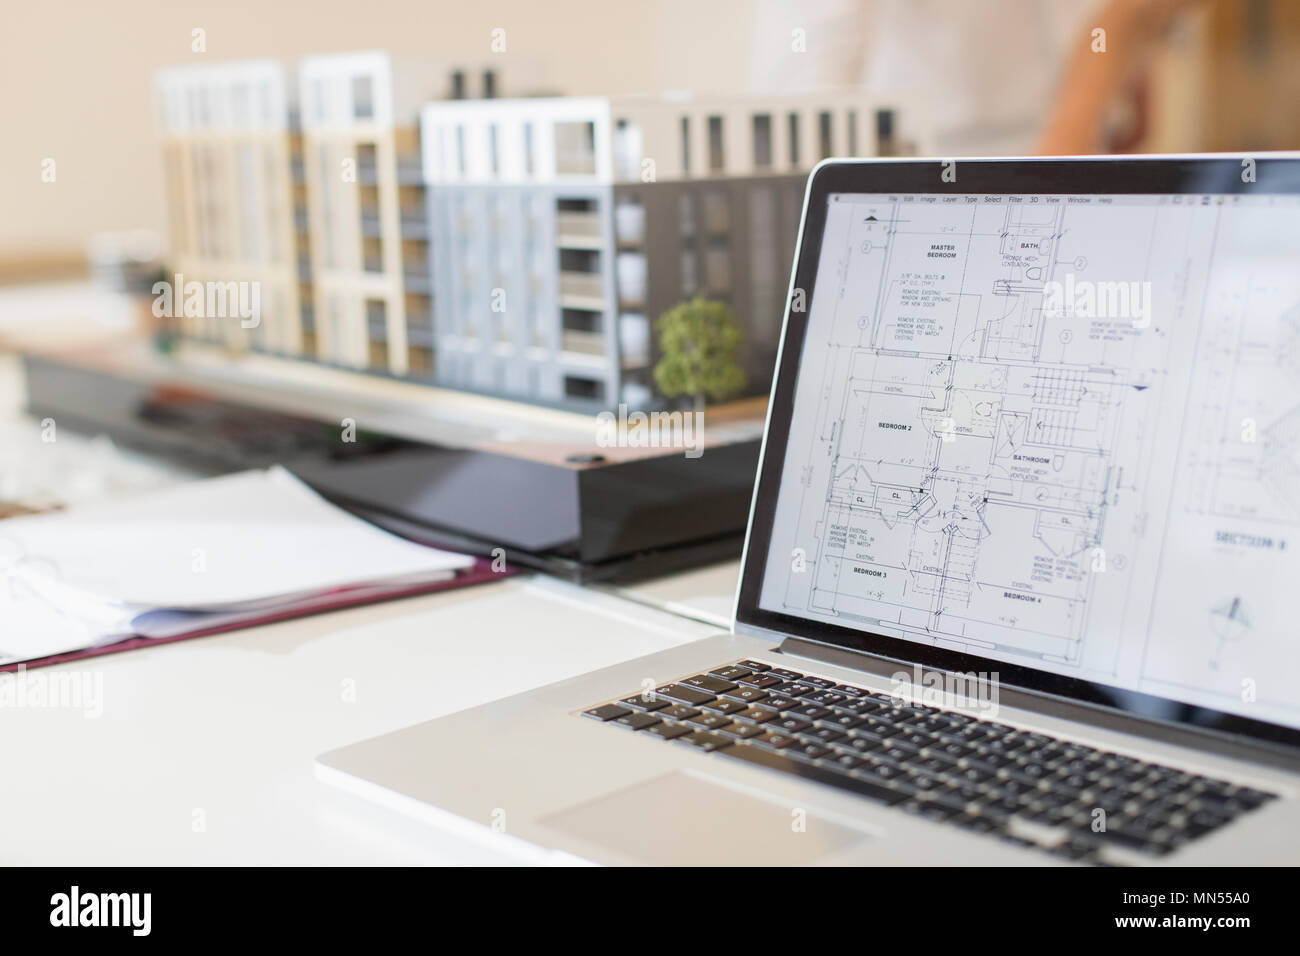 Digital blueprint on laptop next to model Stock Photo